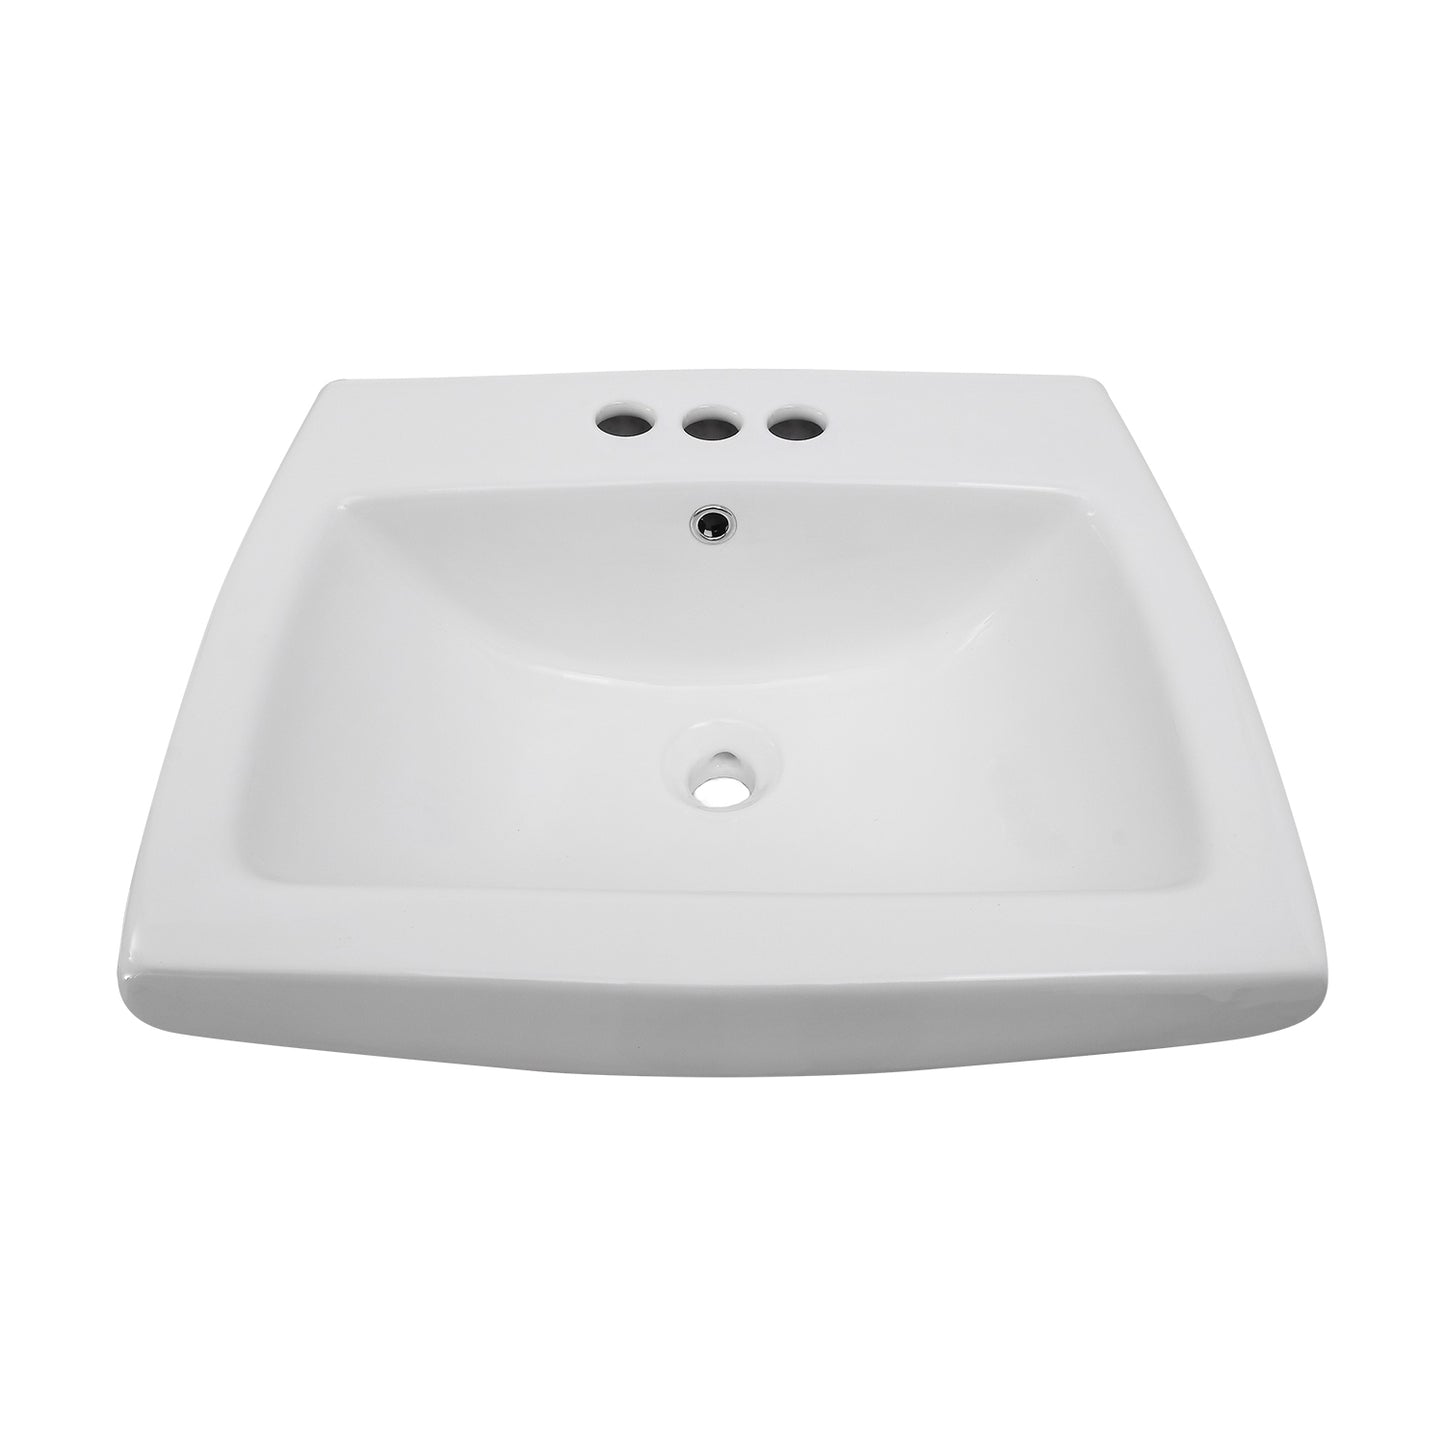 Ambrose Pedestal Bathroom Sink White for 4" Centerset